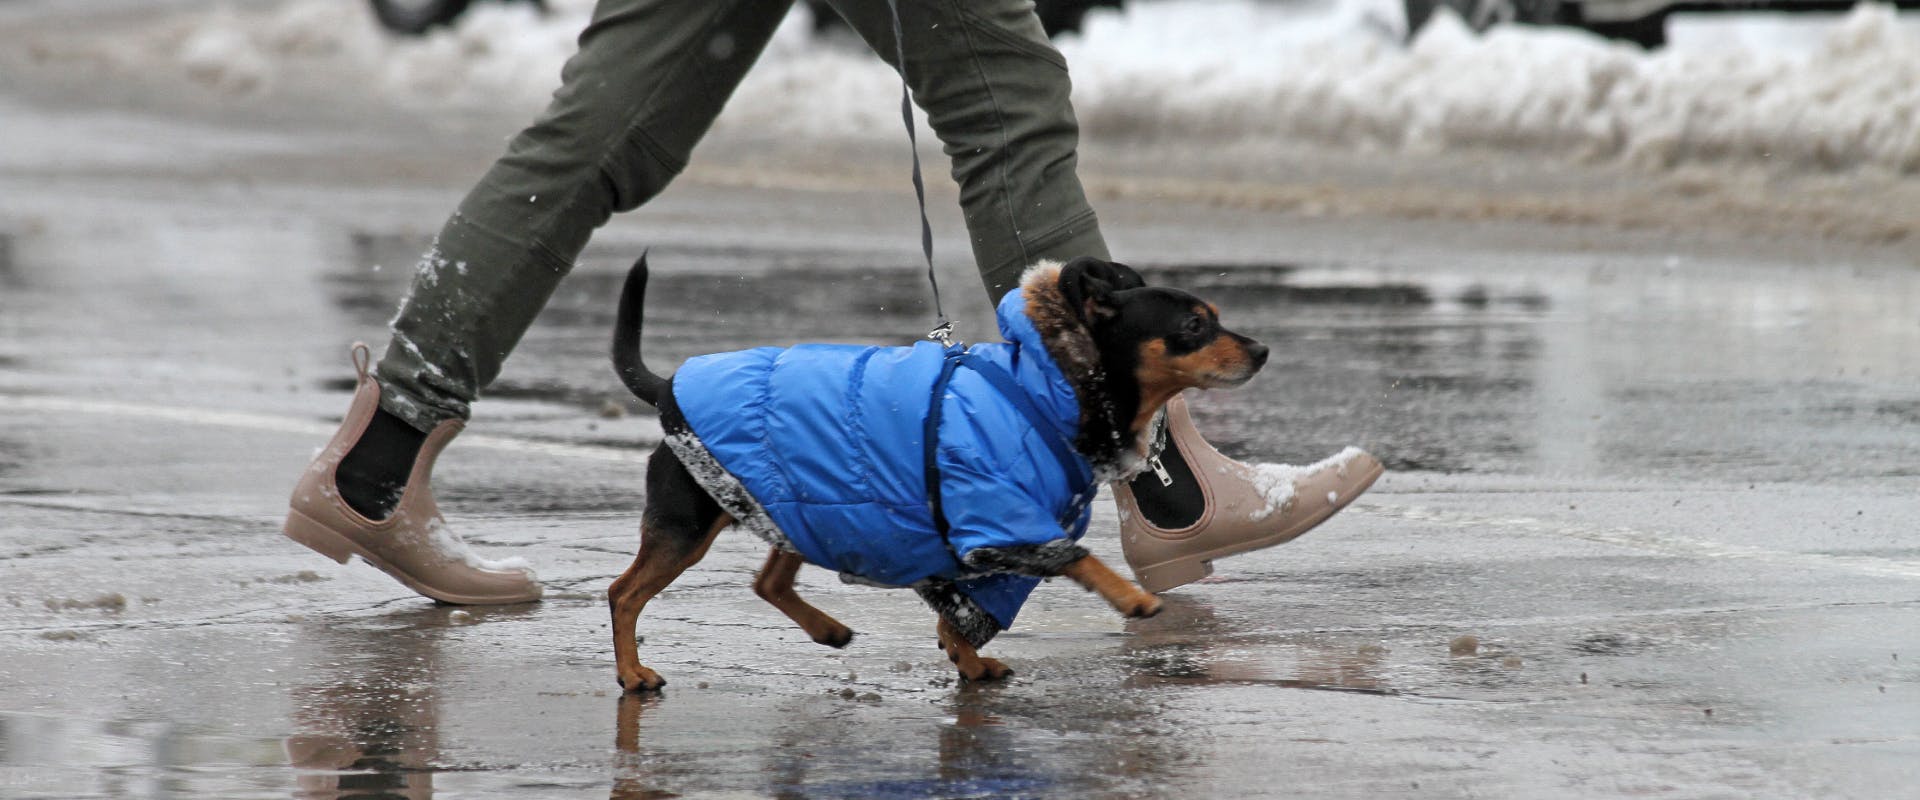 A dog wears a jacket in winter weather.